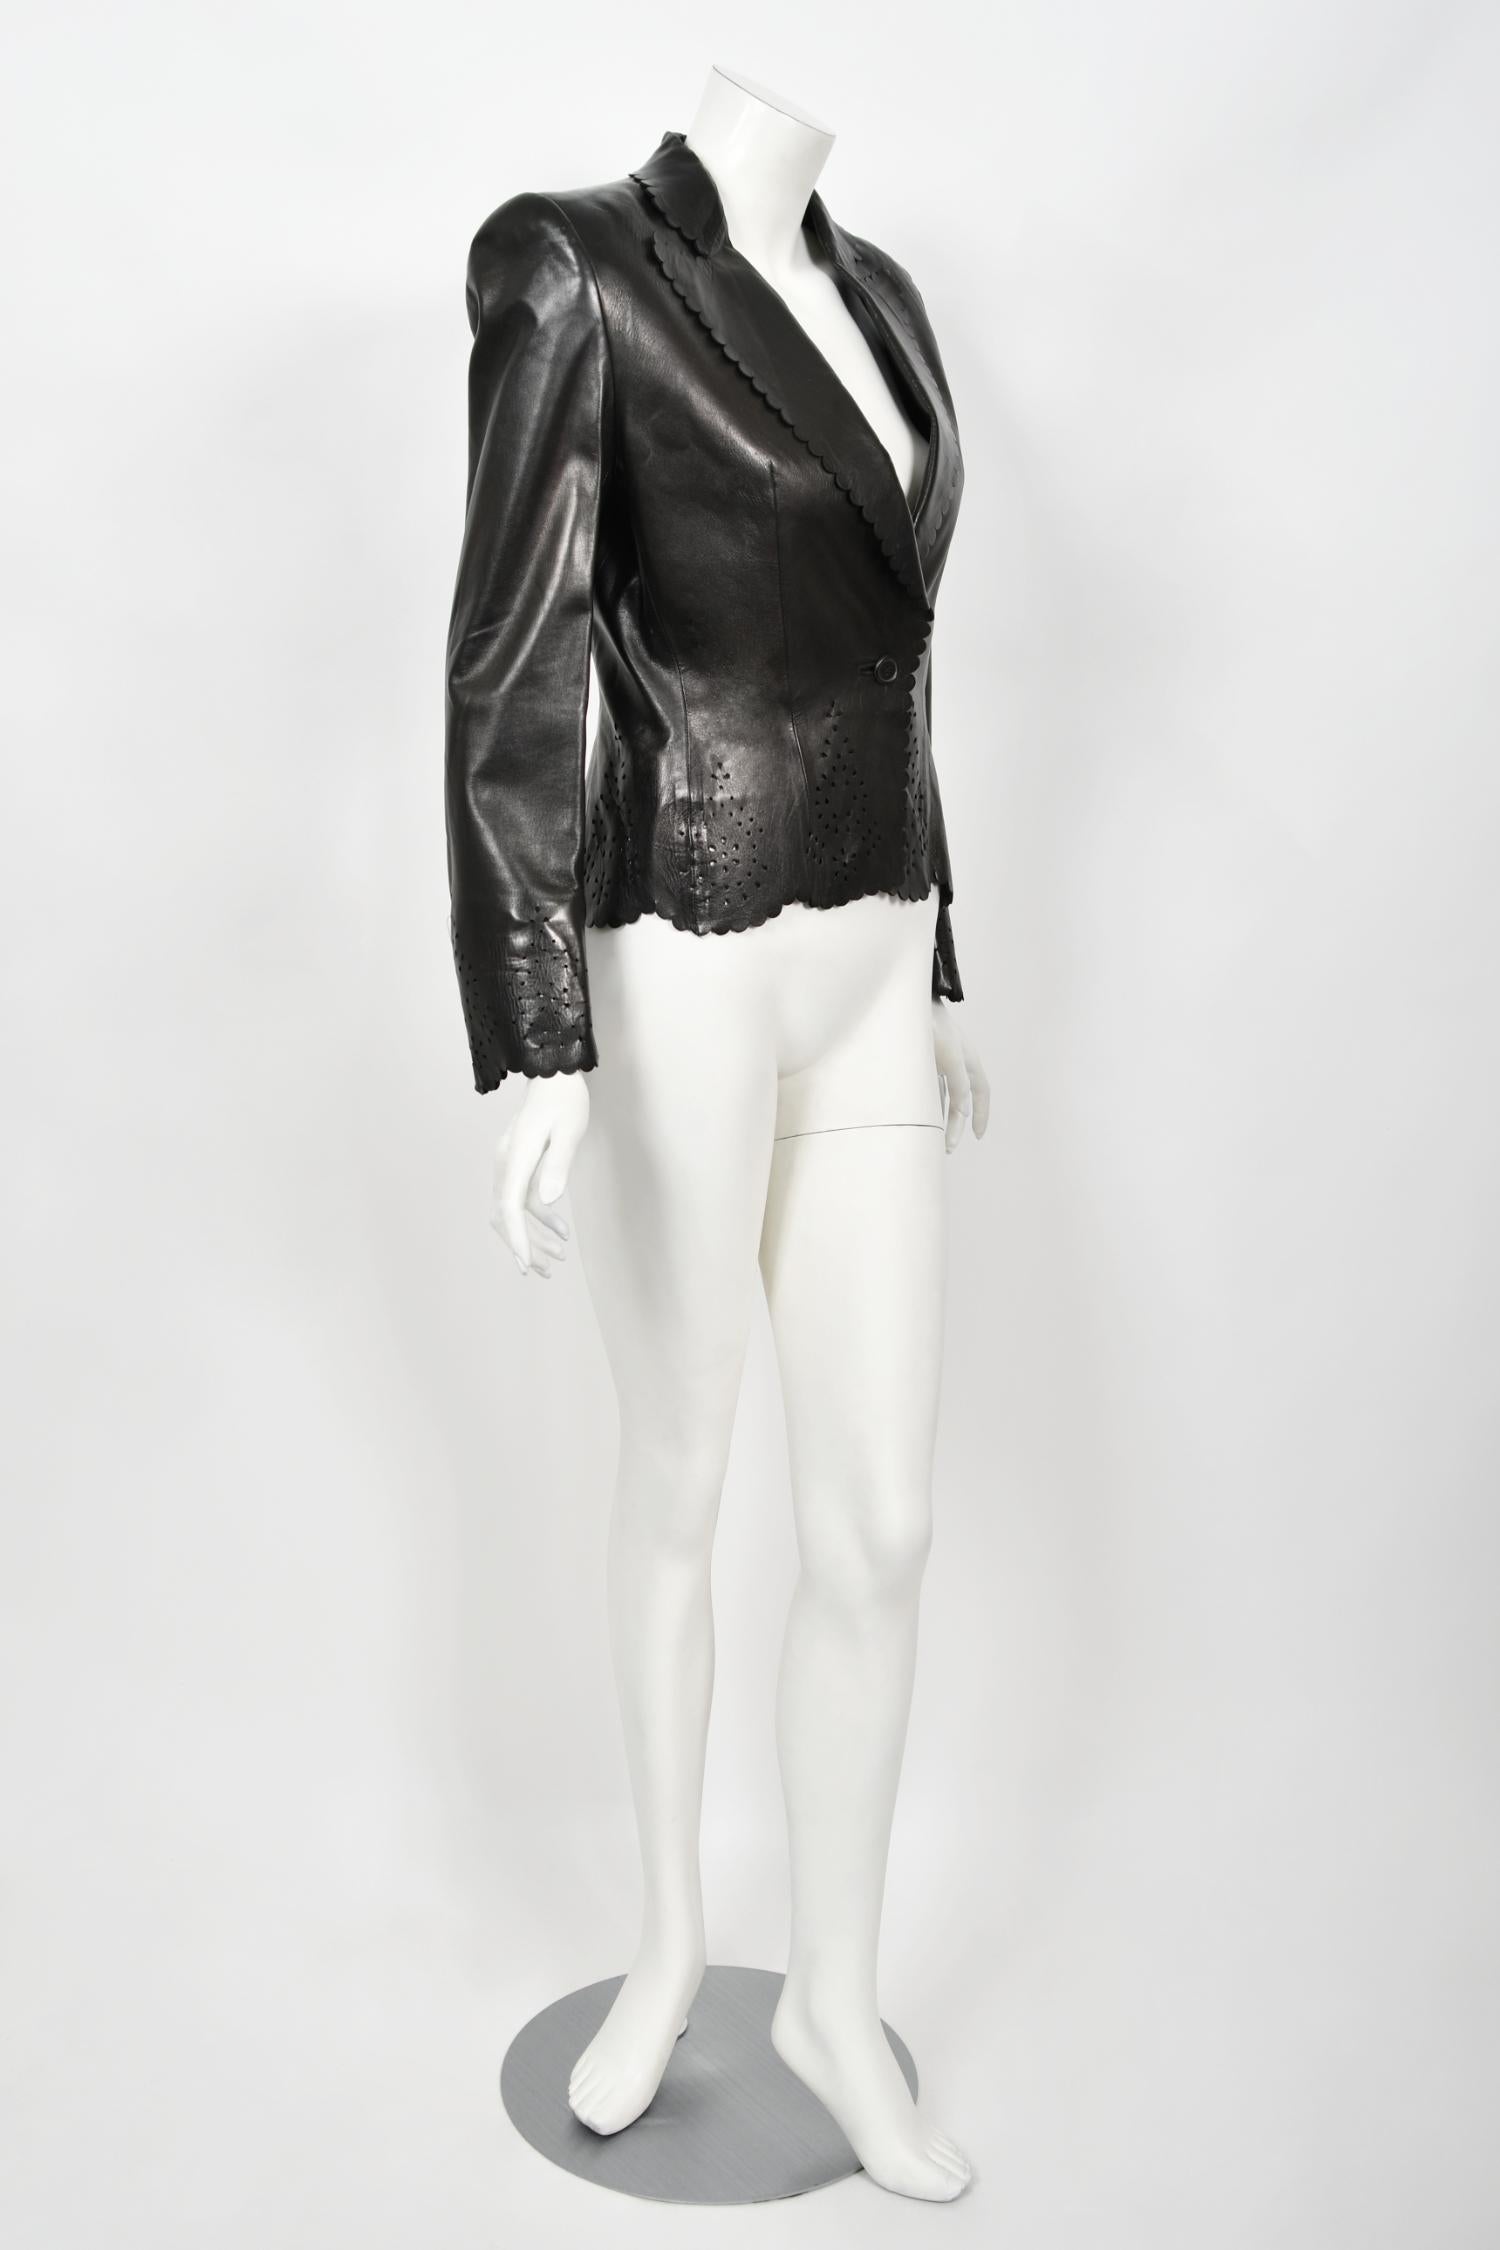 1997 Alexander Mcqueen for Givenchy Runway Black Leather Cutwork Blazer Jacket 6